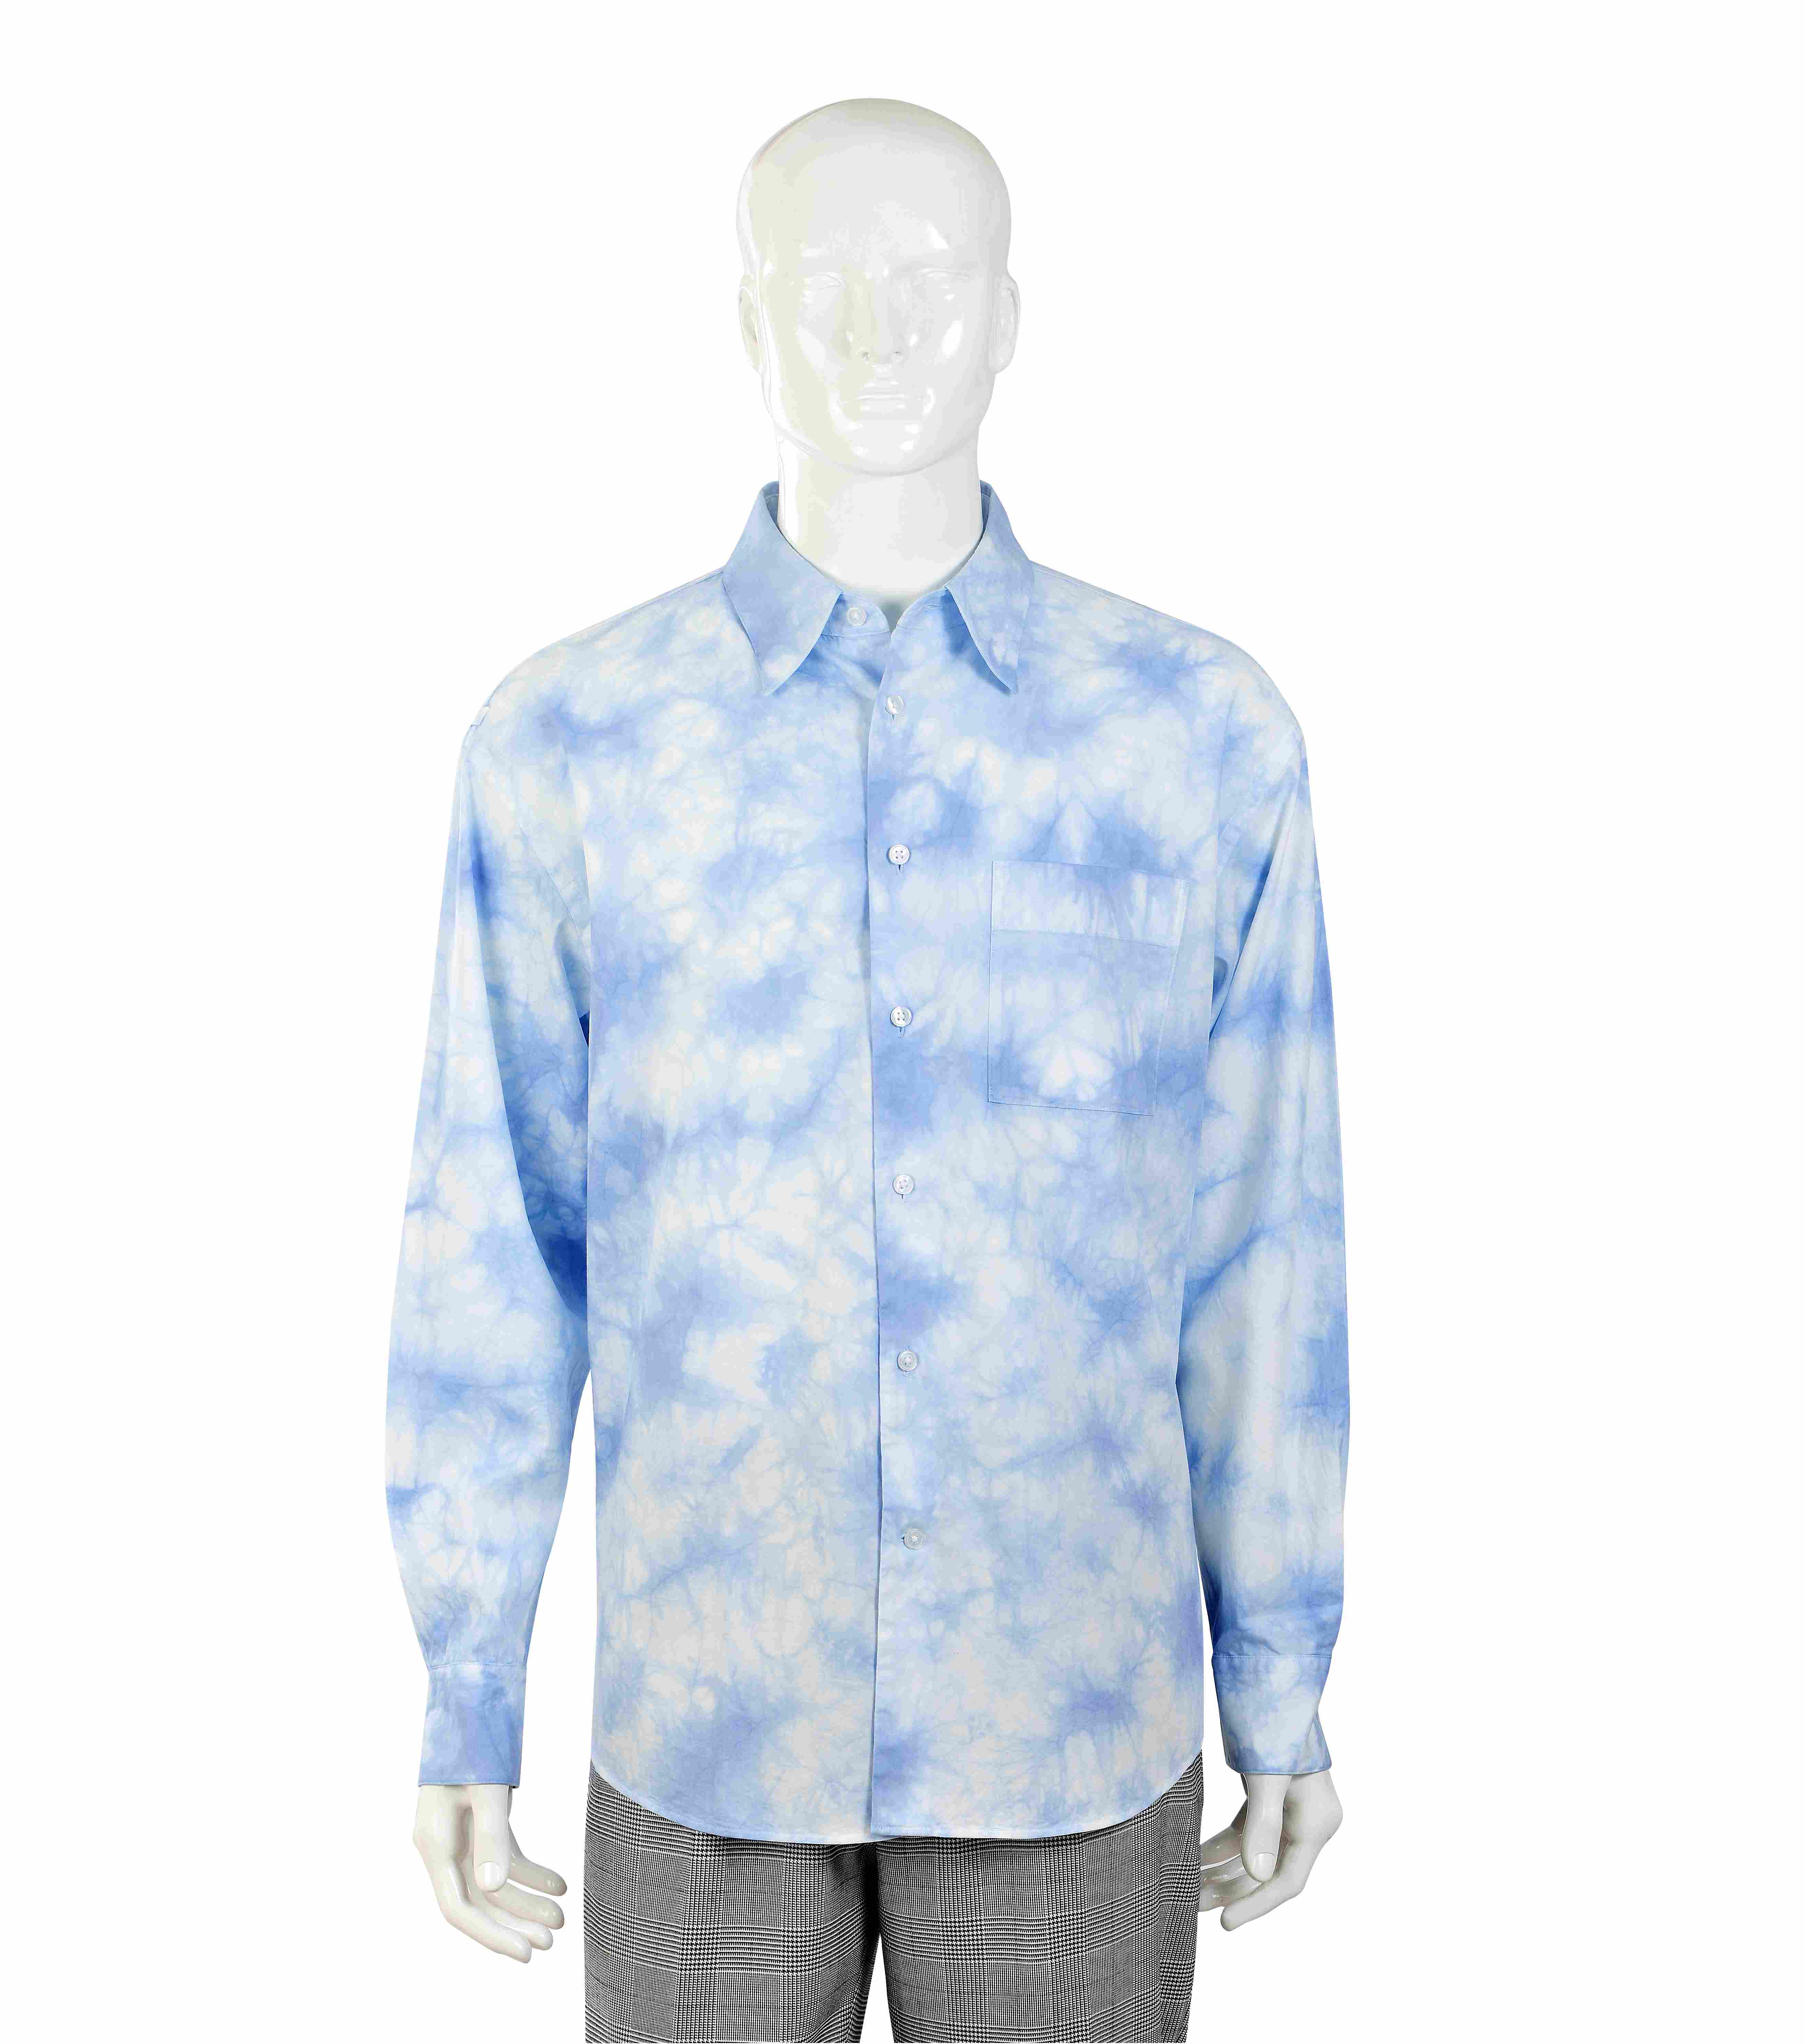 Men's tie-dye long-sleeved fashionable woven shirt